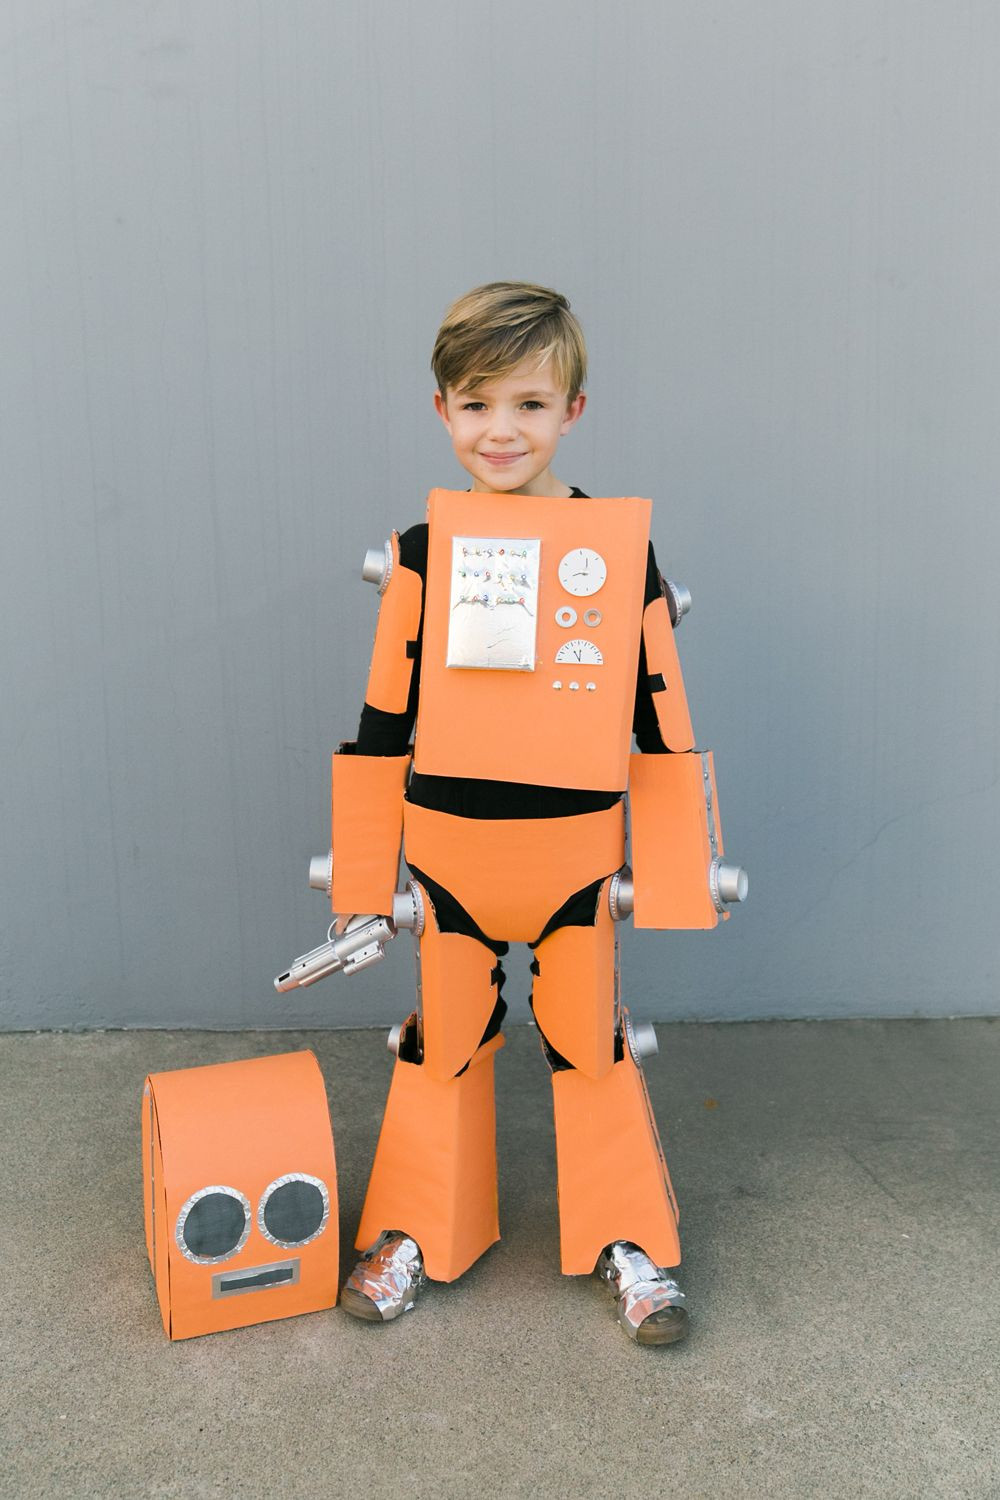 DIY Robot Costume Toddler
 DIY ROBOT FAMILY COSTUME